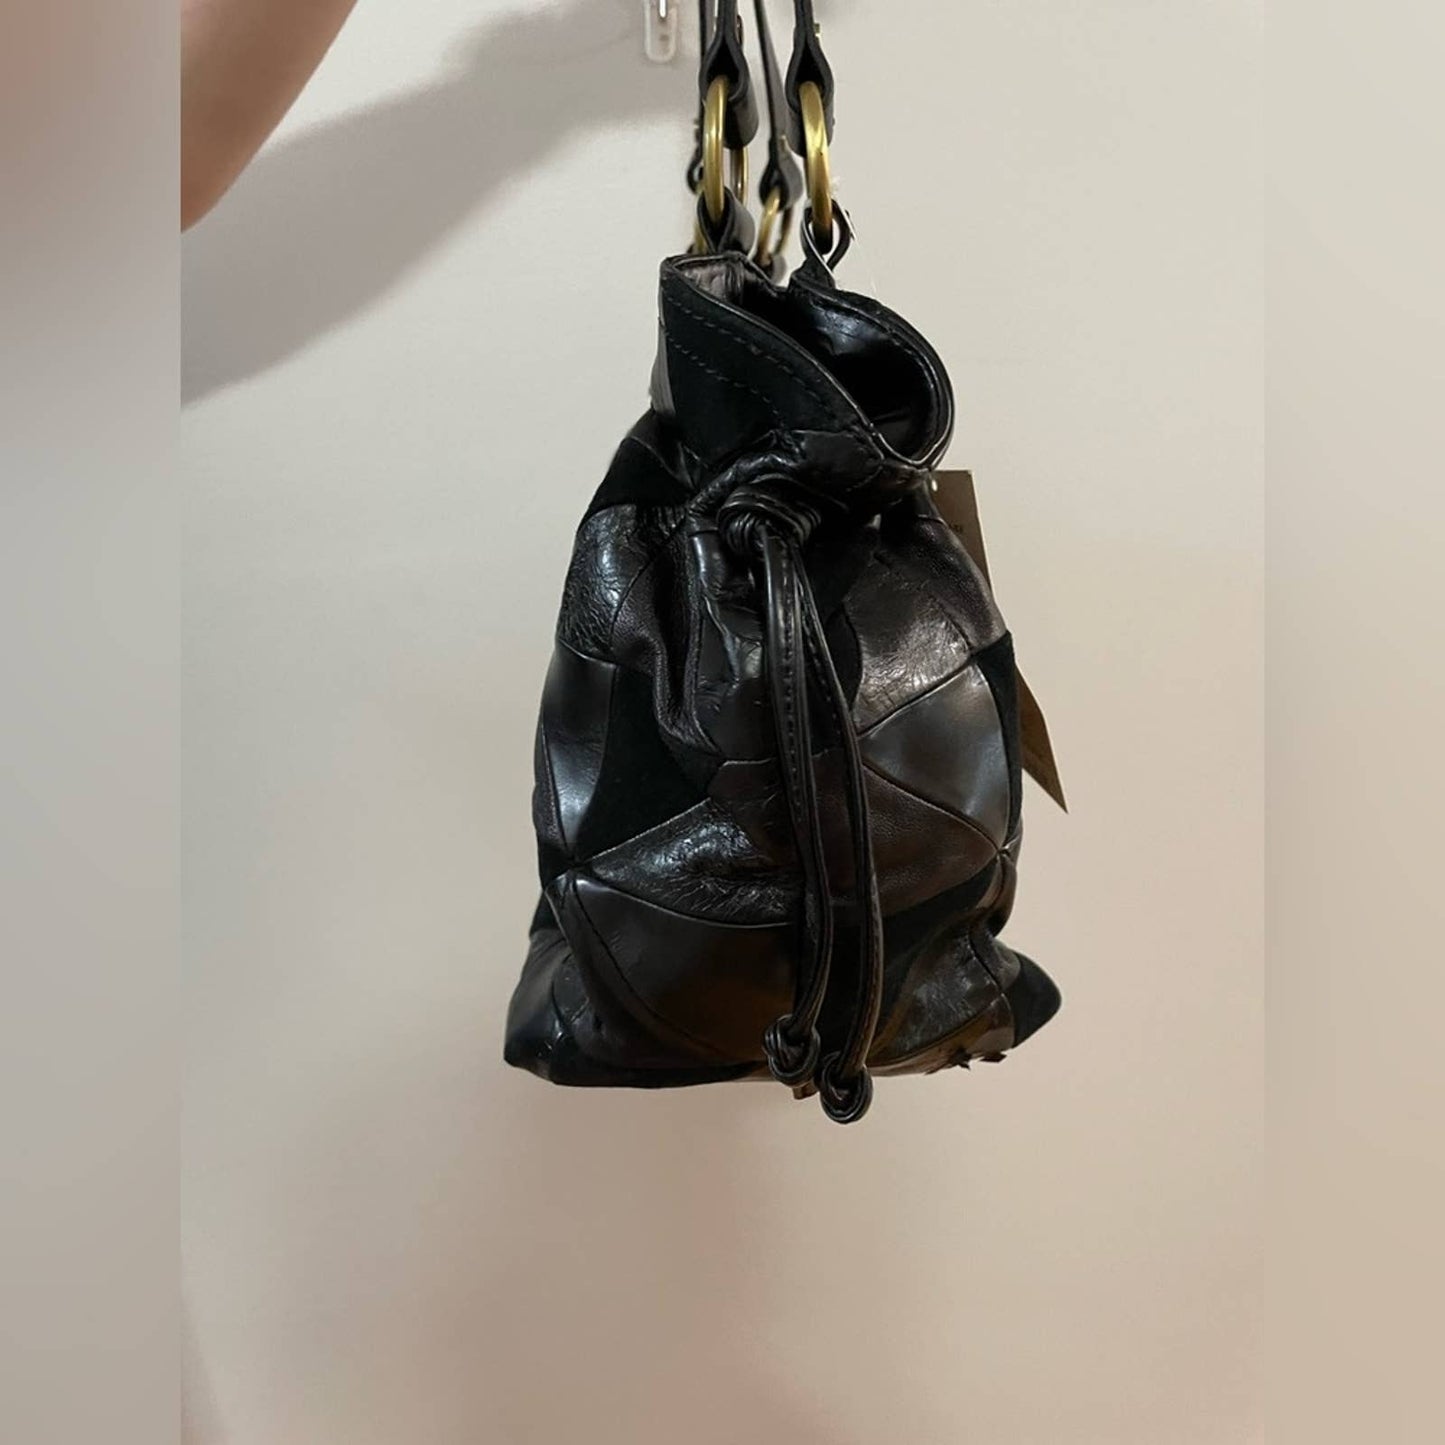 NWT (Damaged) Laura Ashley Black Leather Shoulder Bag